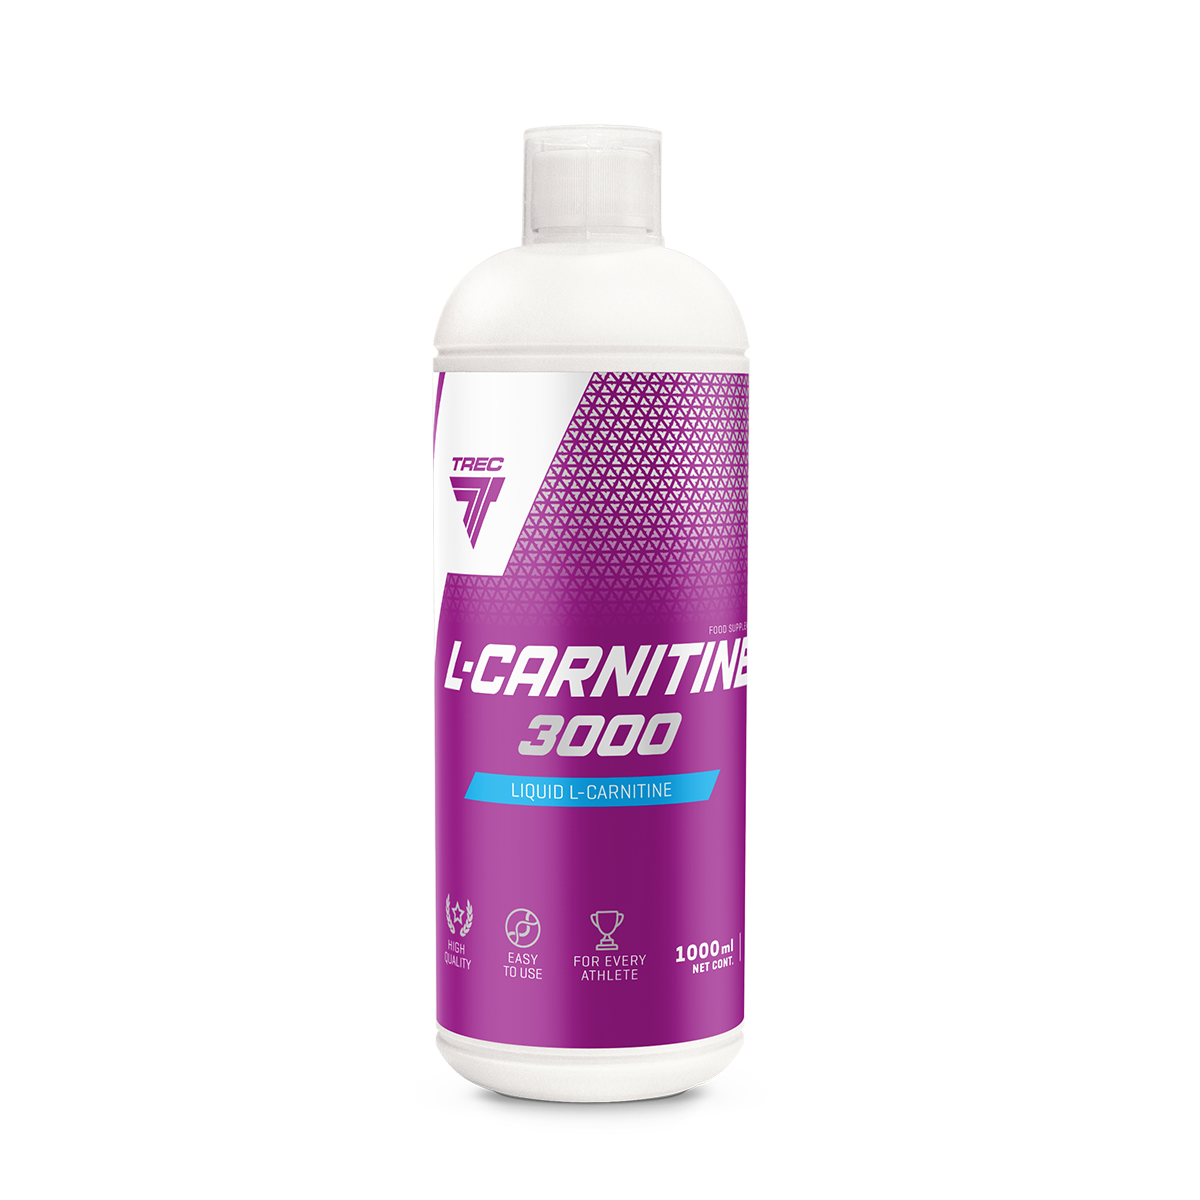 Trec Nutrition L-Carnitine 3000, 1000 мл, вкус: вишня